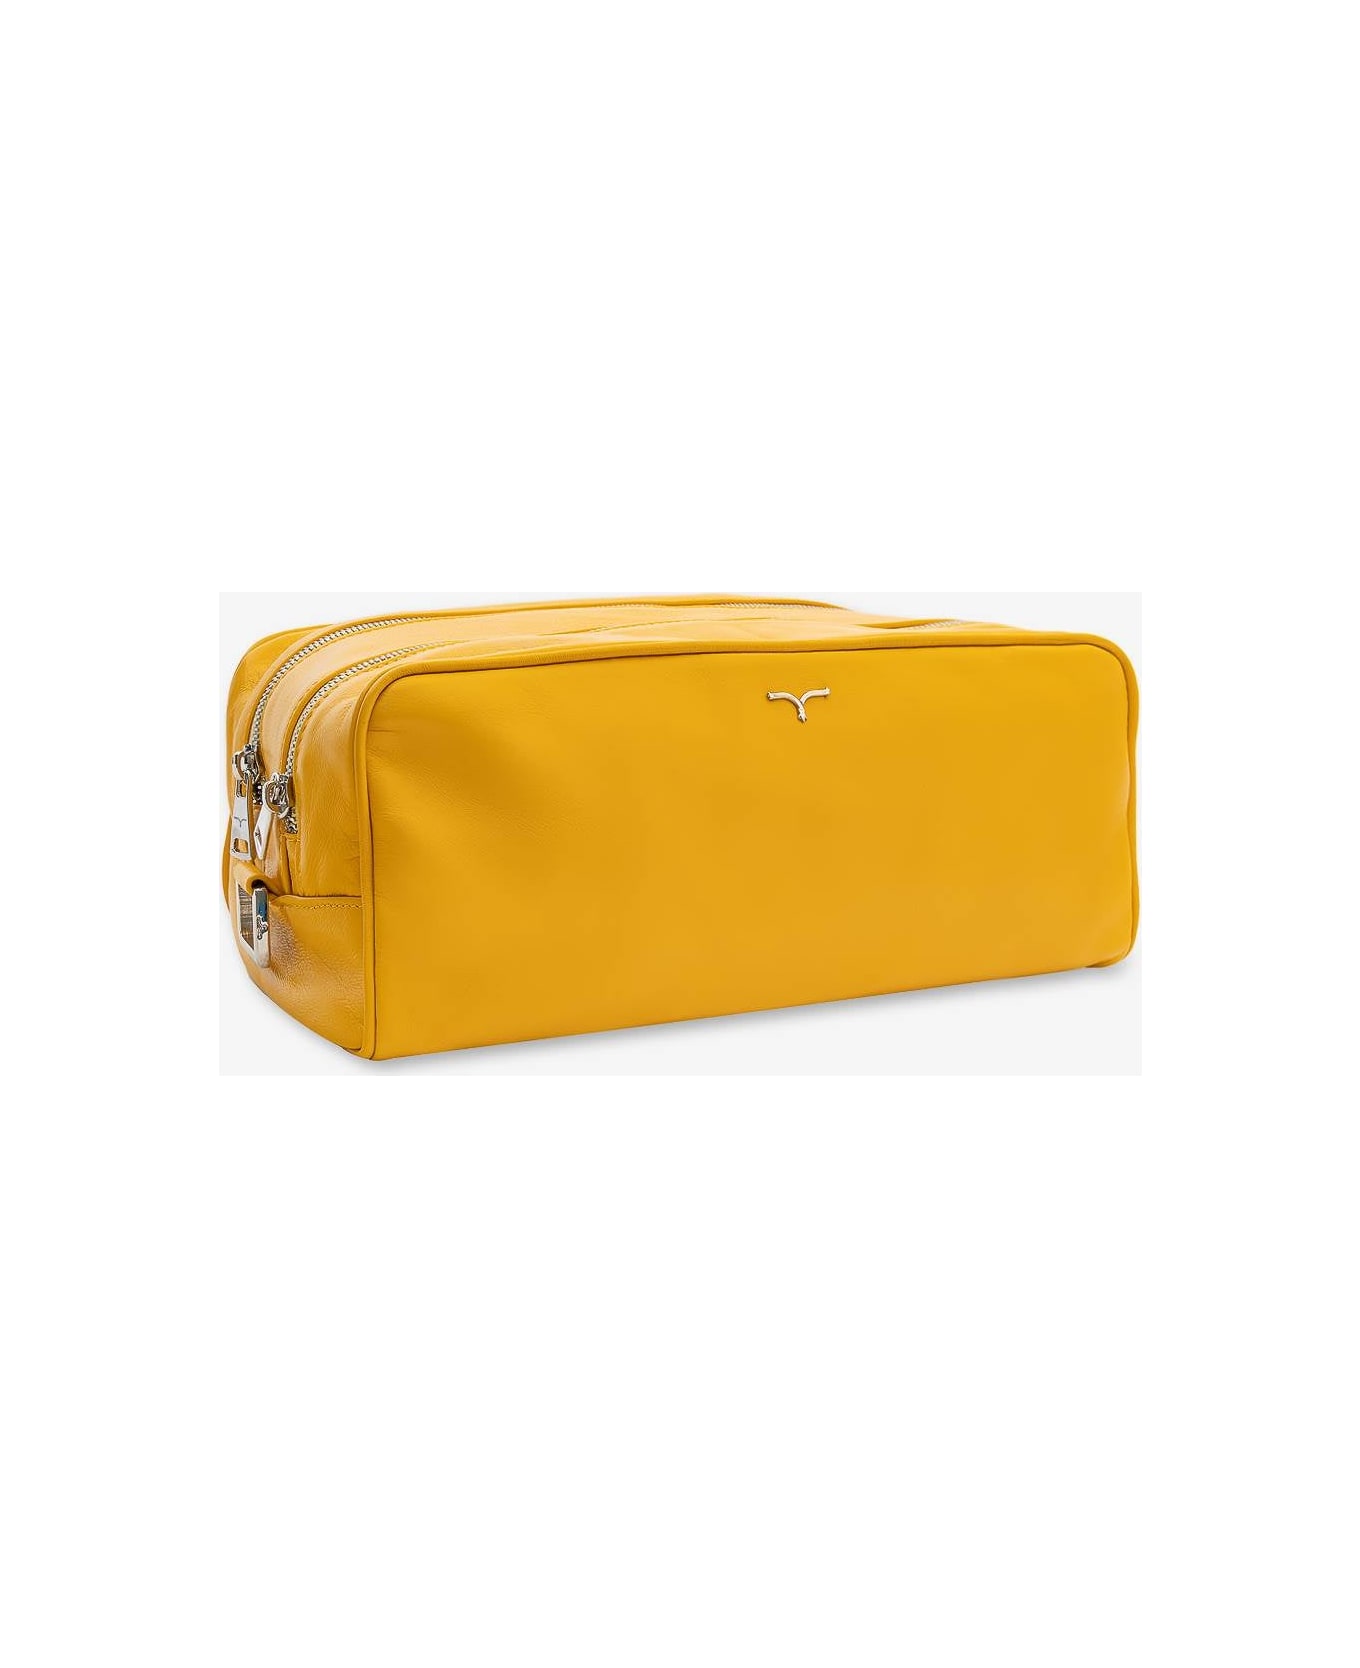 Larusmiani Wash Bag'tzar' Luggage - Gold トラベルバッグ